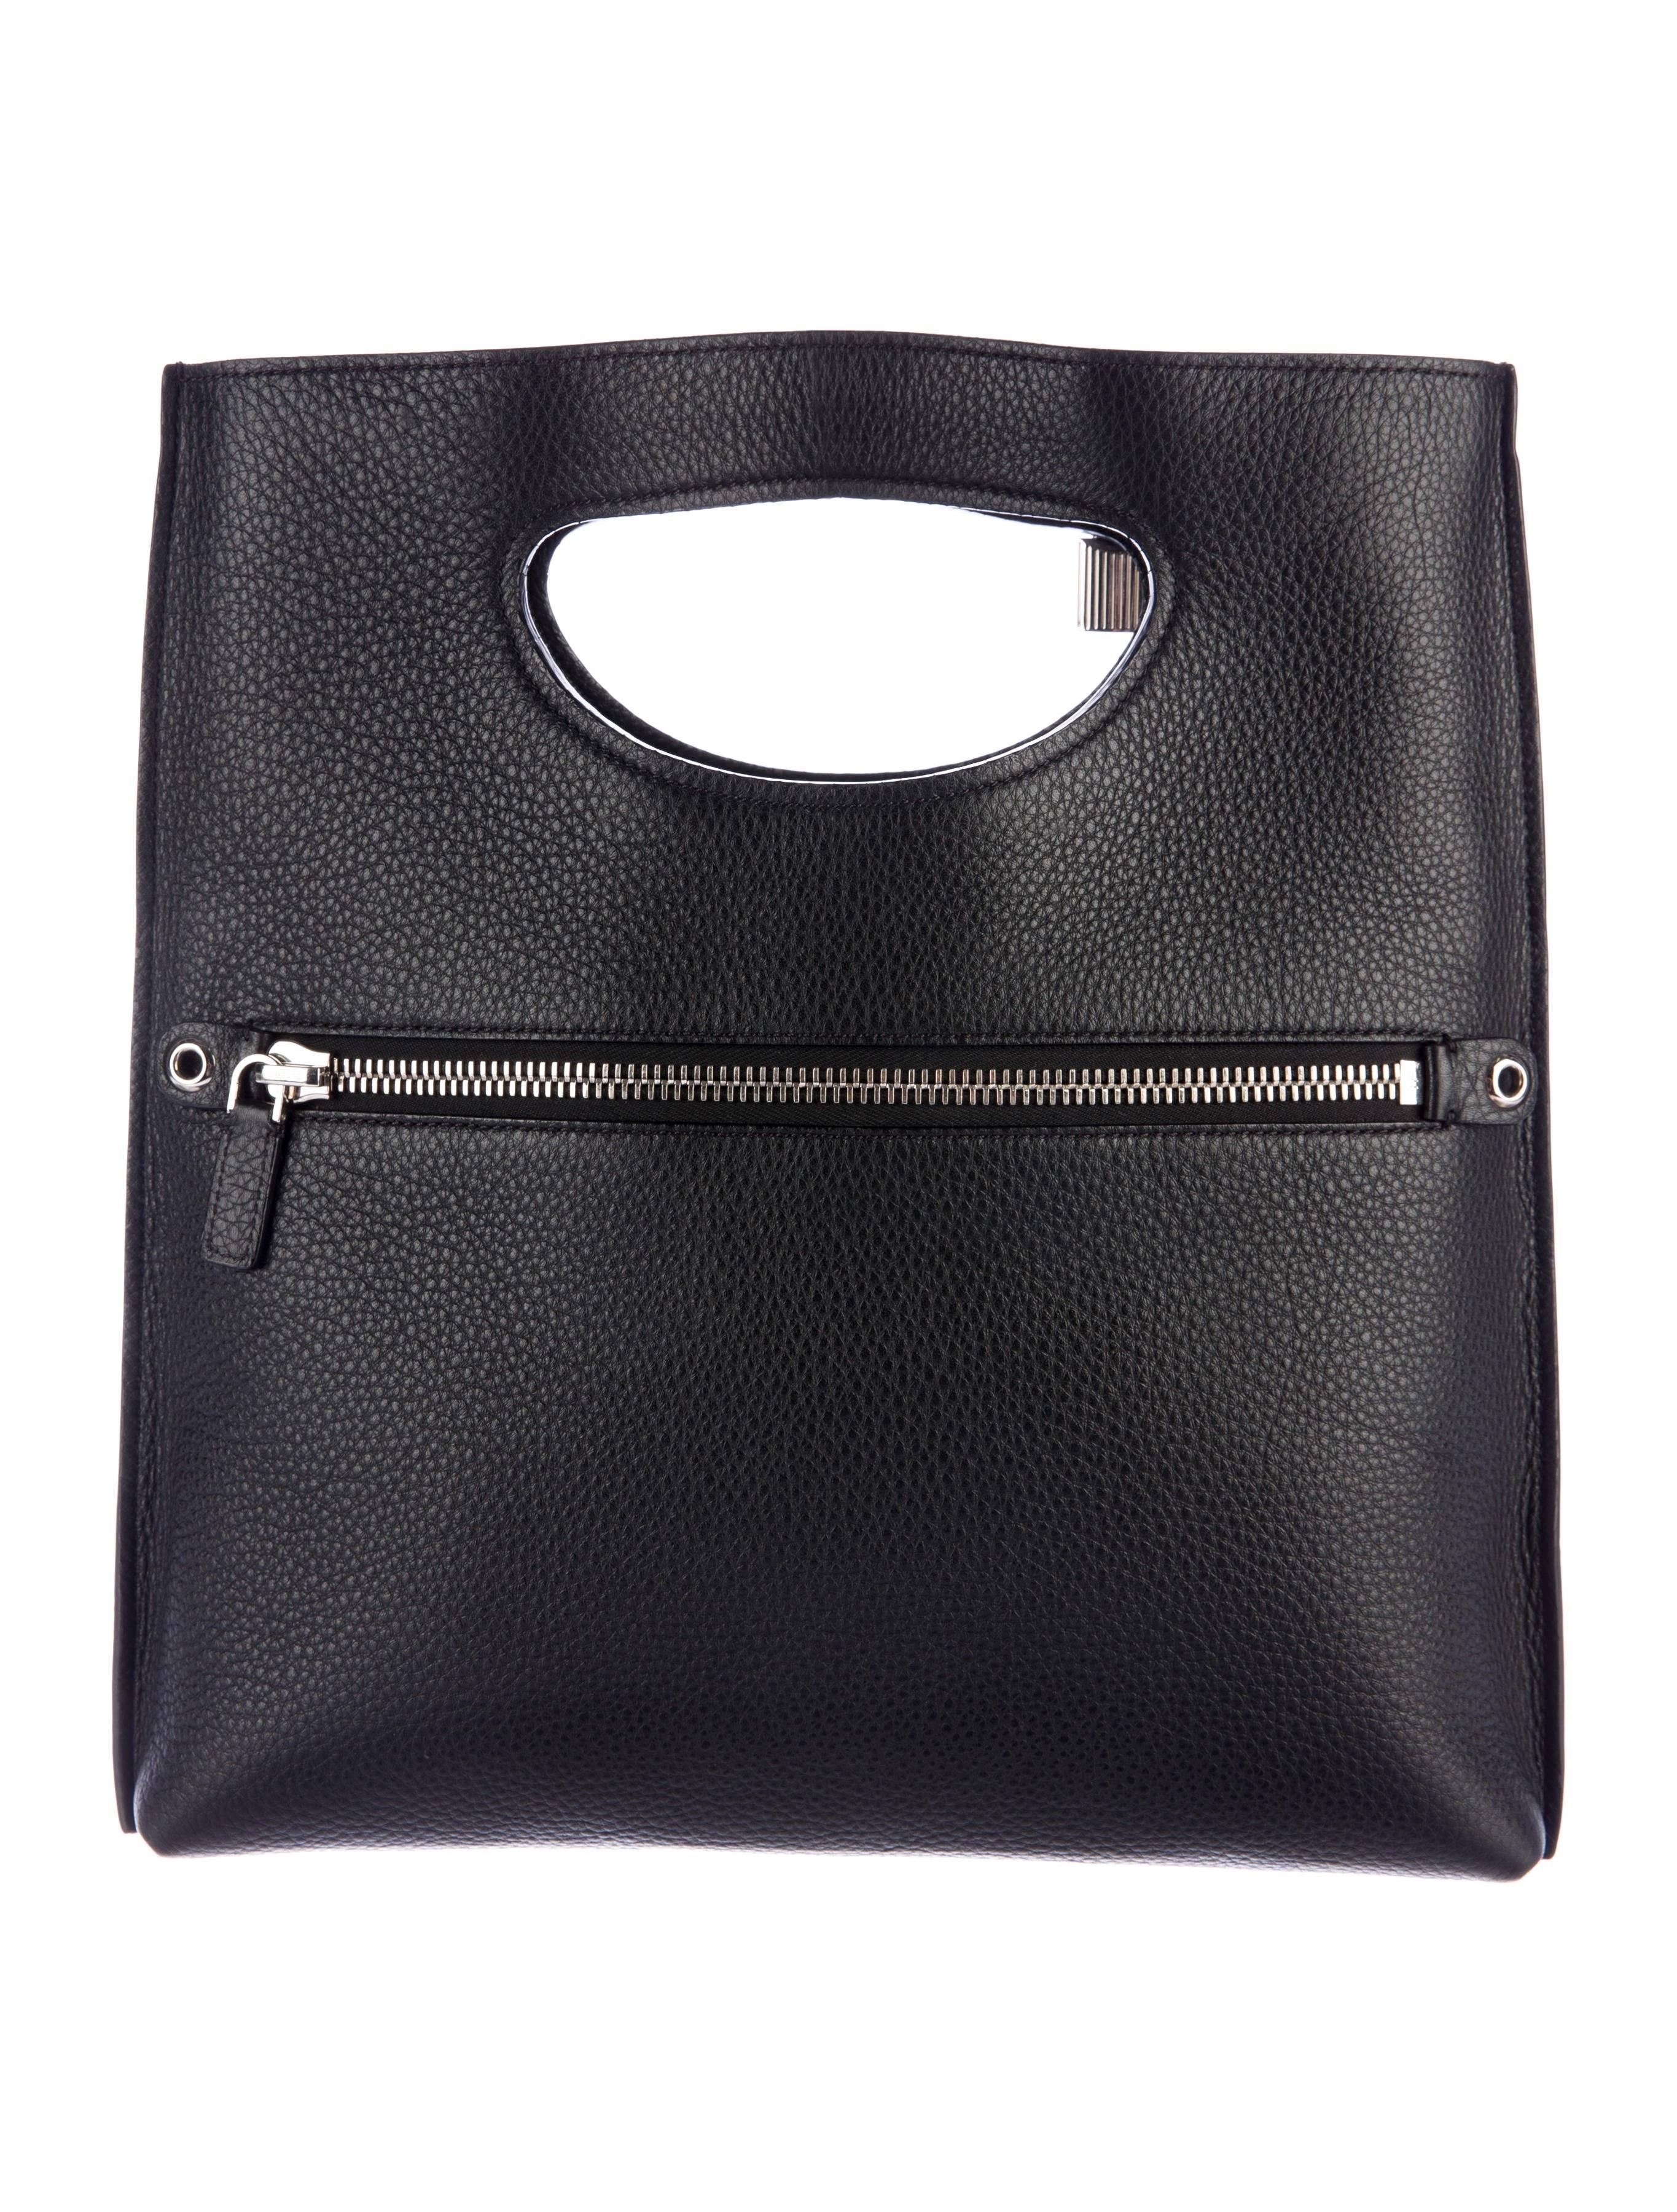 Tom Ford Black Leather Silver Lock 2 in 1 Evening Clutch Crossbody Shoulder Bag 1